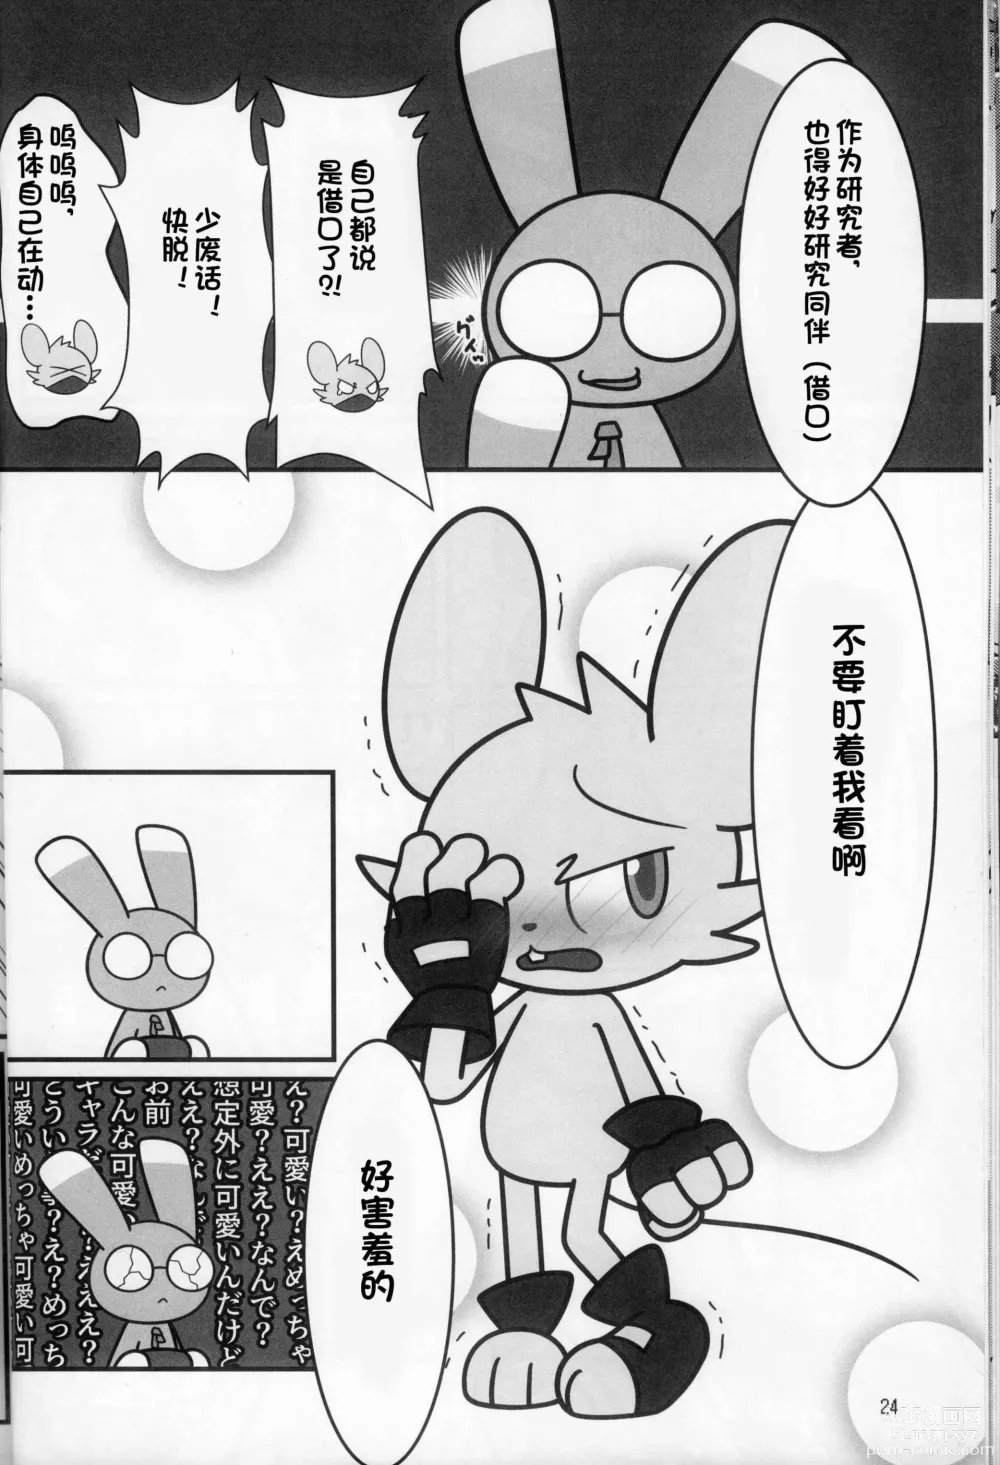 Page 24 of doujinshi 低头身Q版吉祥物 vol.8 Type-Z